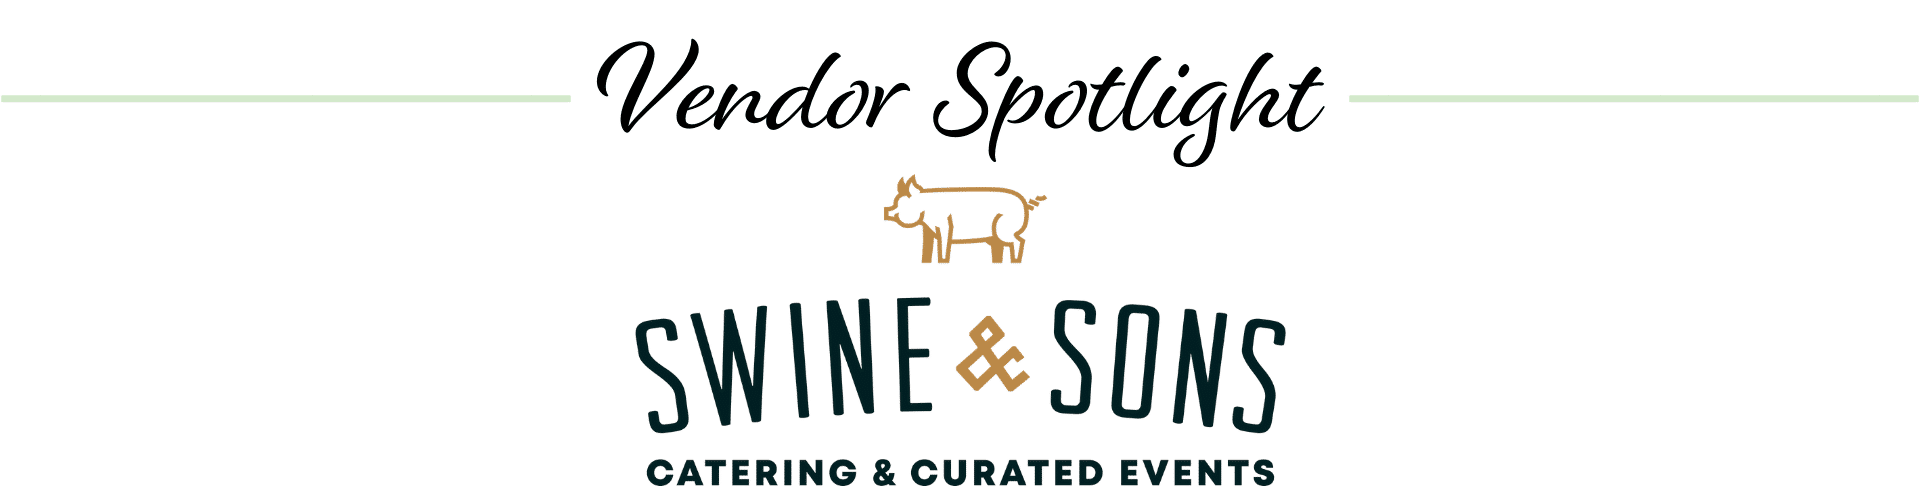 Swine & Sons logo